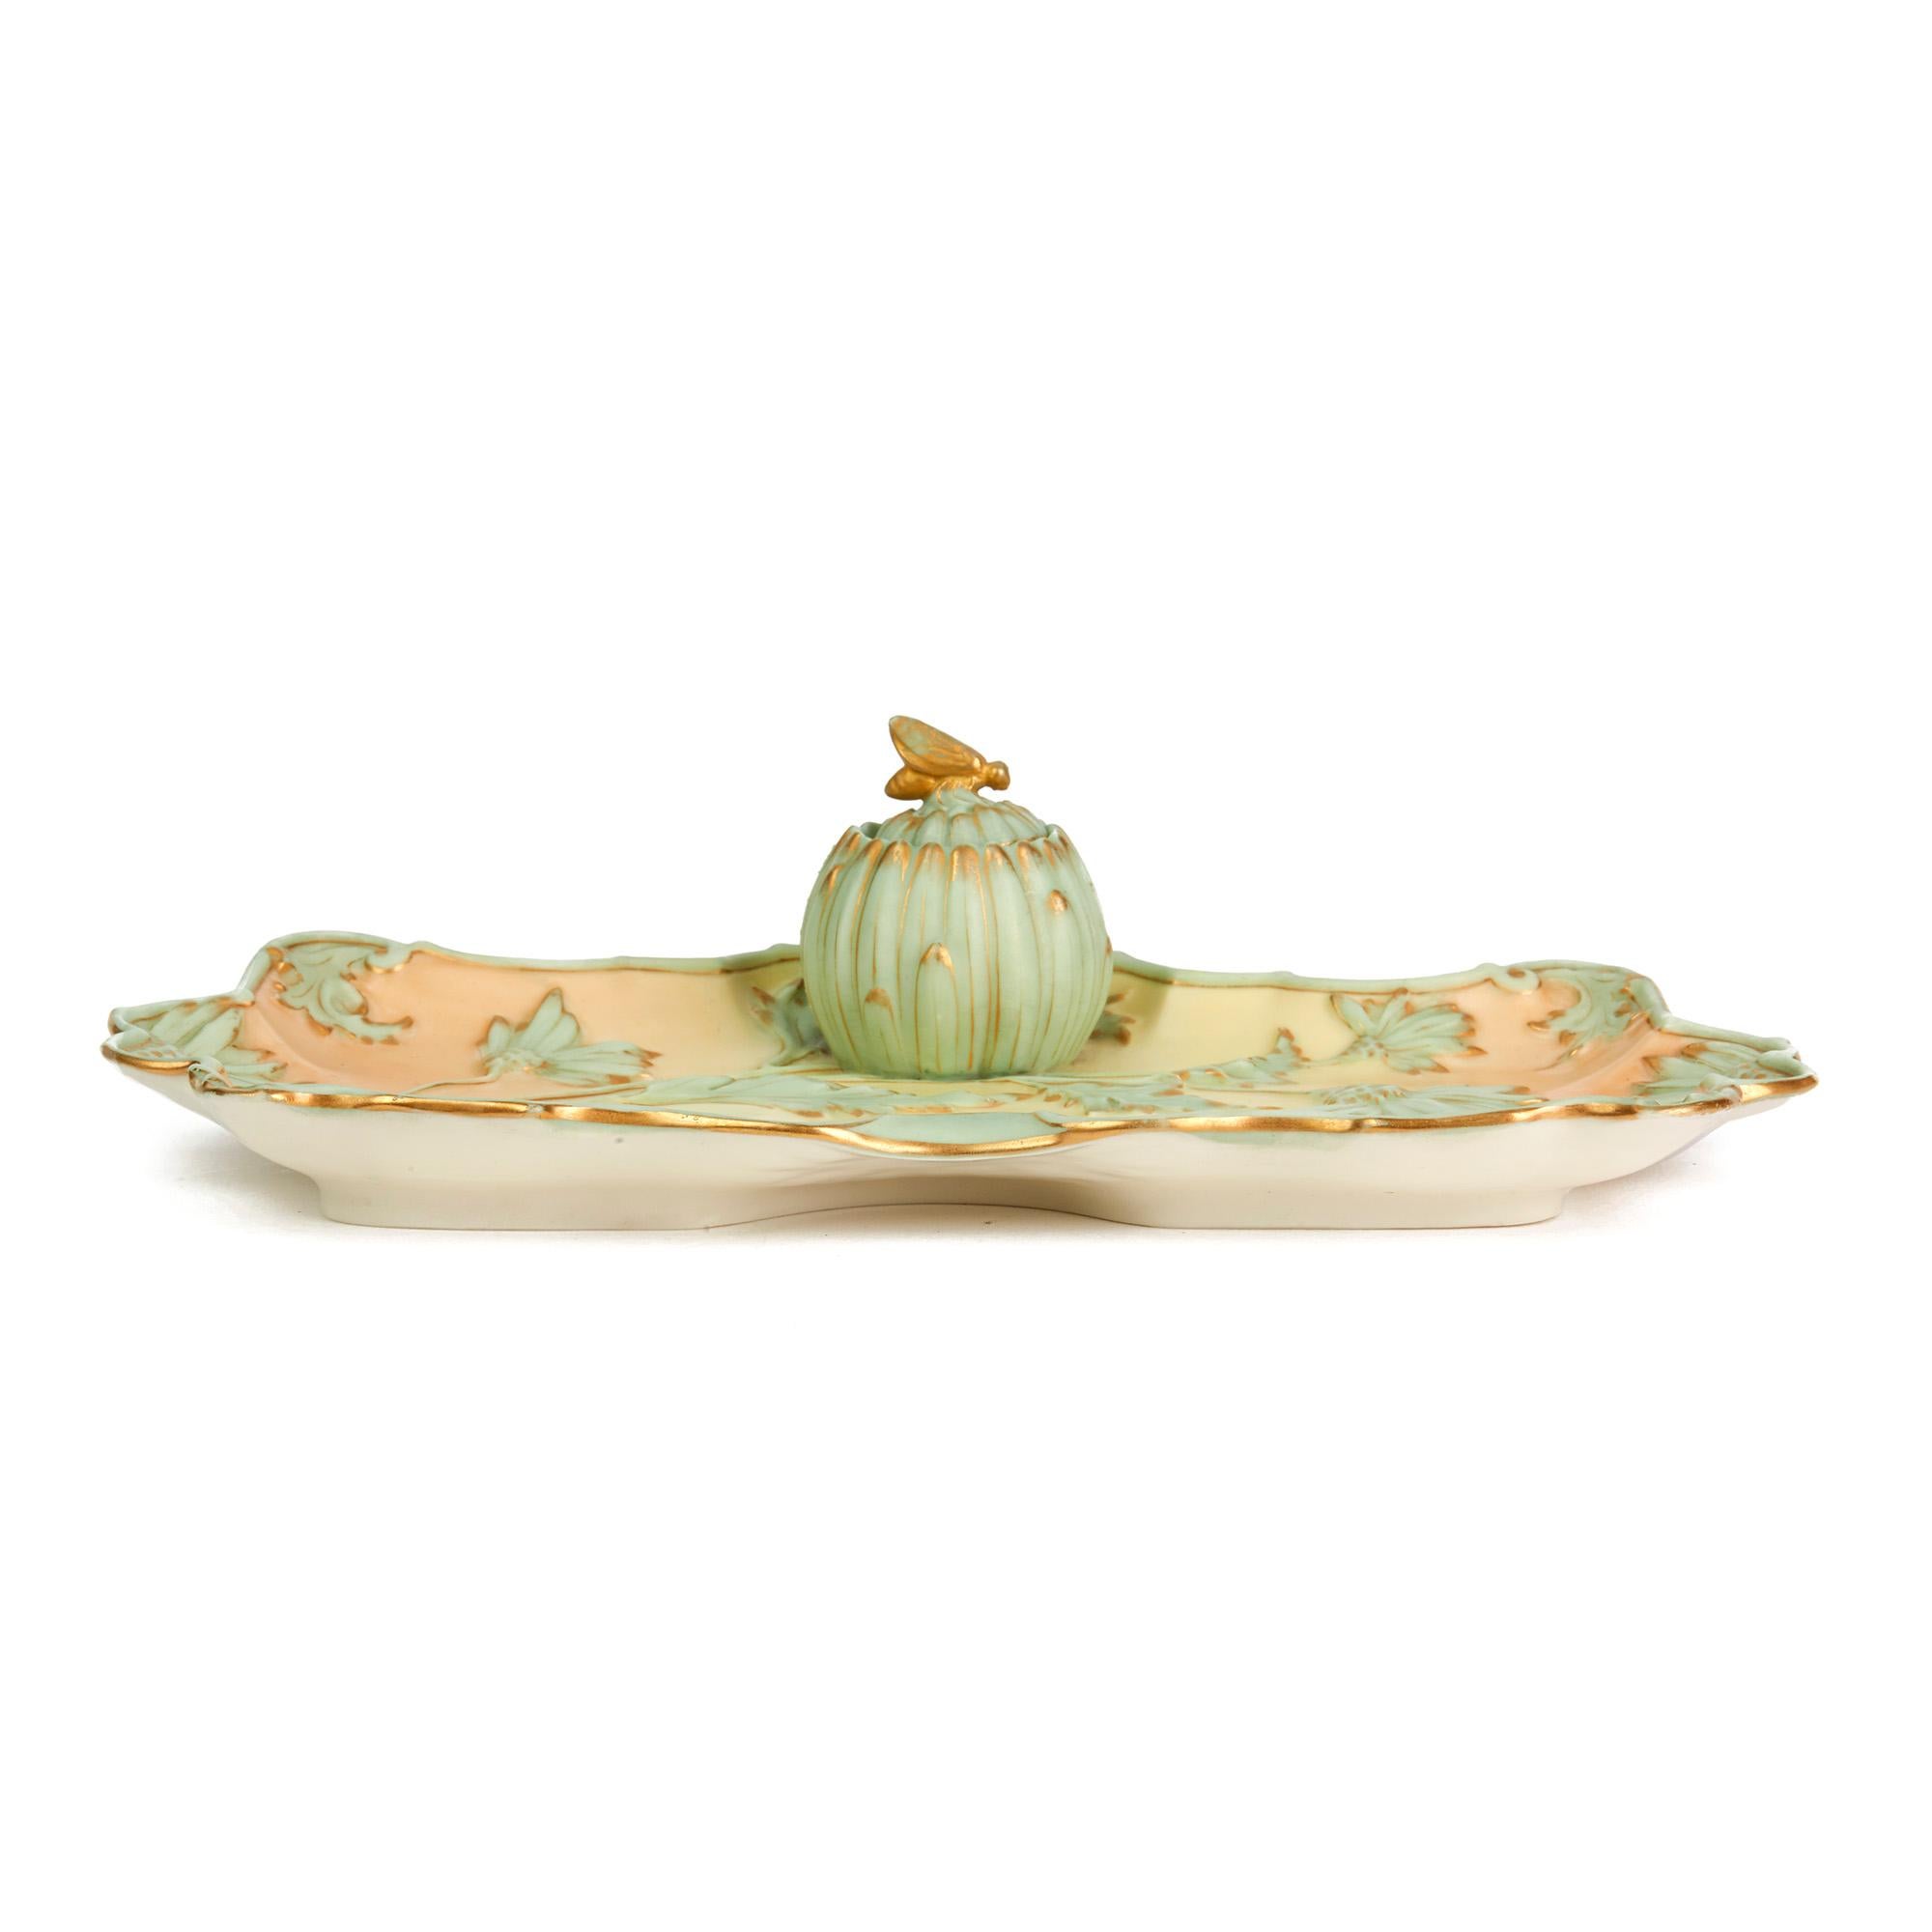 Royal Worcester Art Nouveau Blush Porcelain Desk Stand Dated 1894 For Sale 3